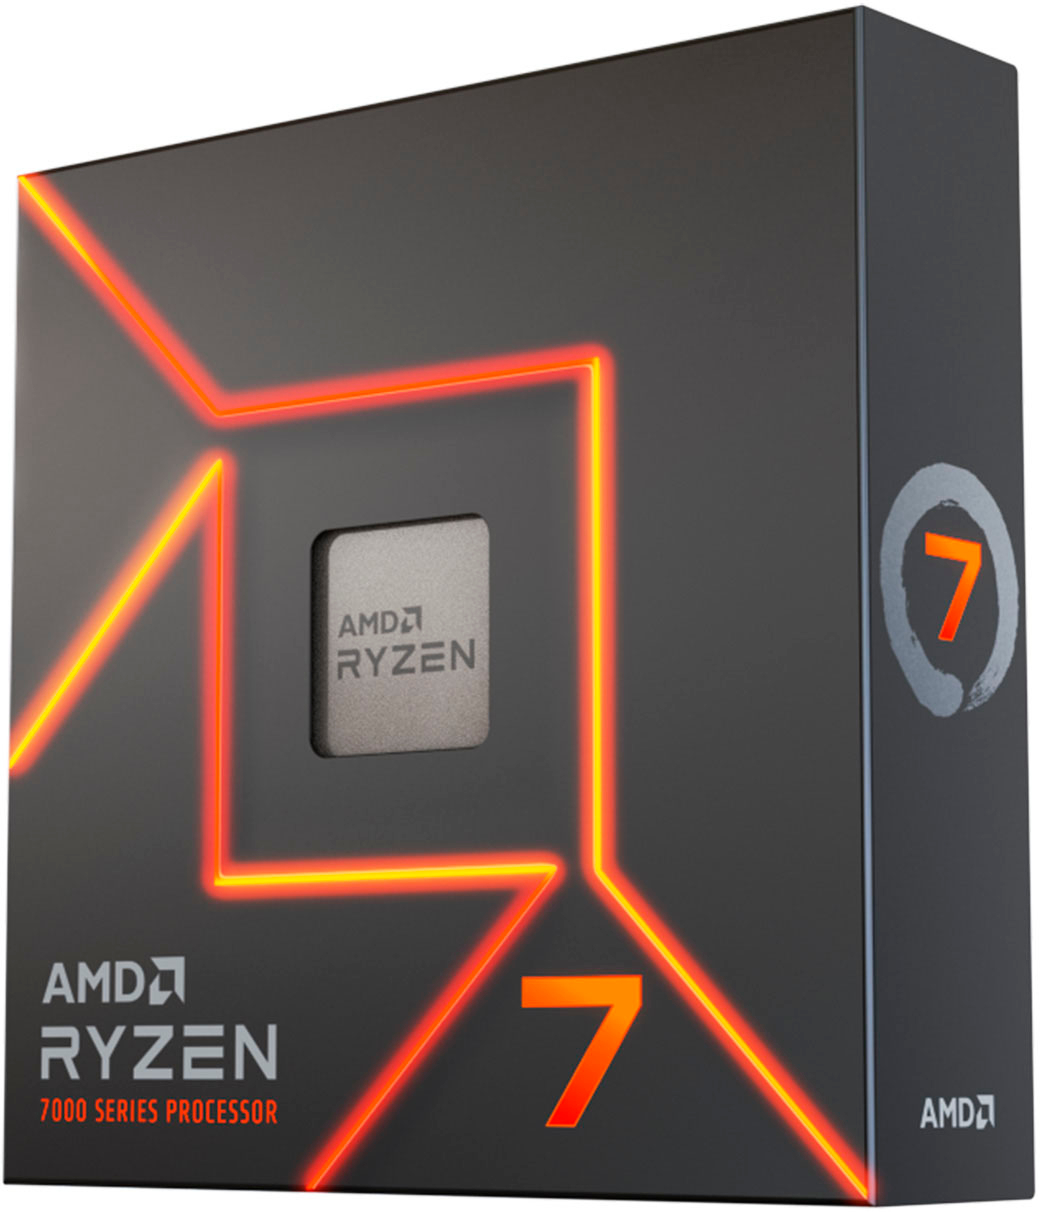 Comparing 4 Generations of Ryzen 7 CPUs! 7700X vs 5700X vs 3700X vs 2700X 